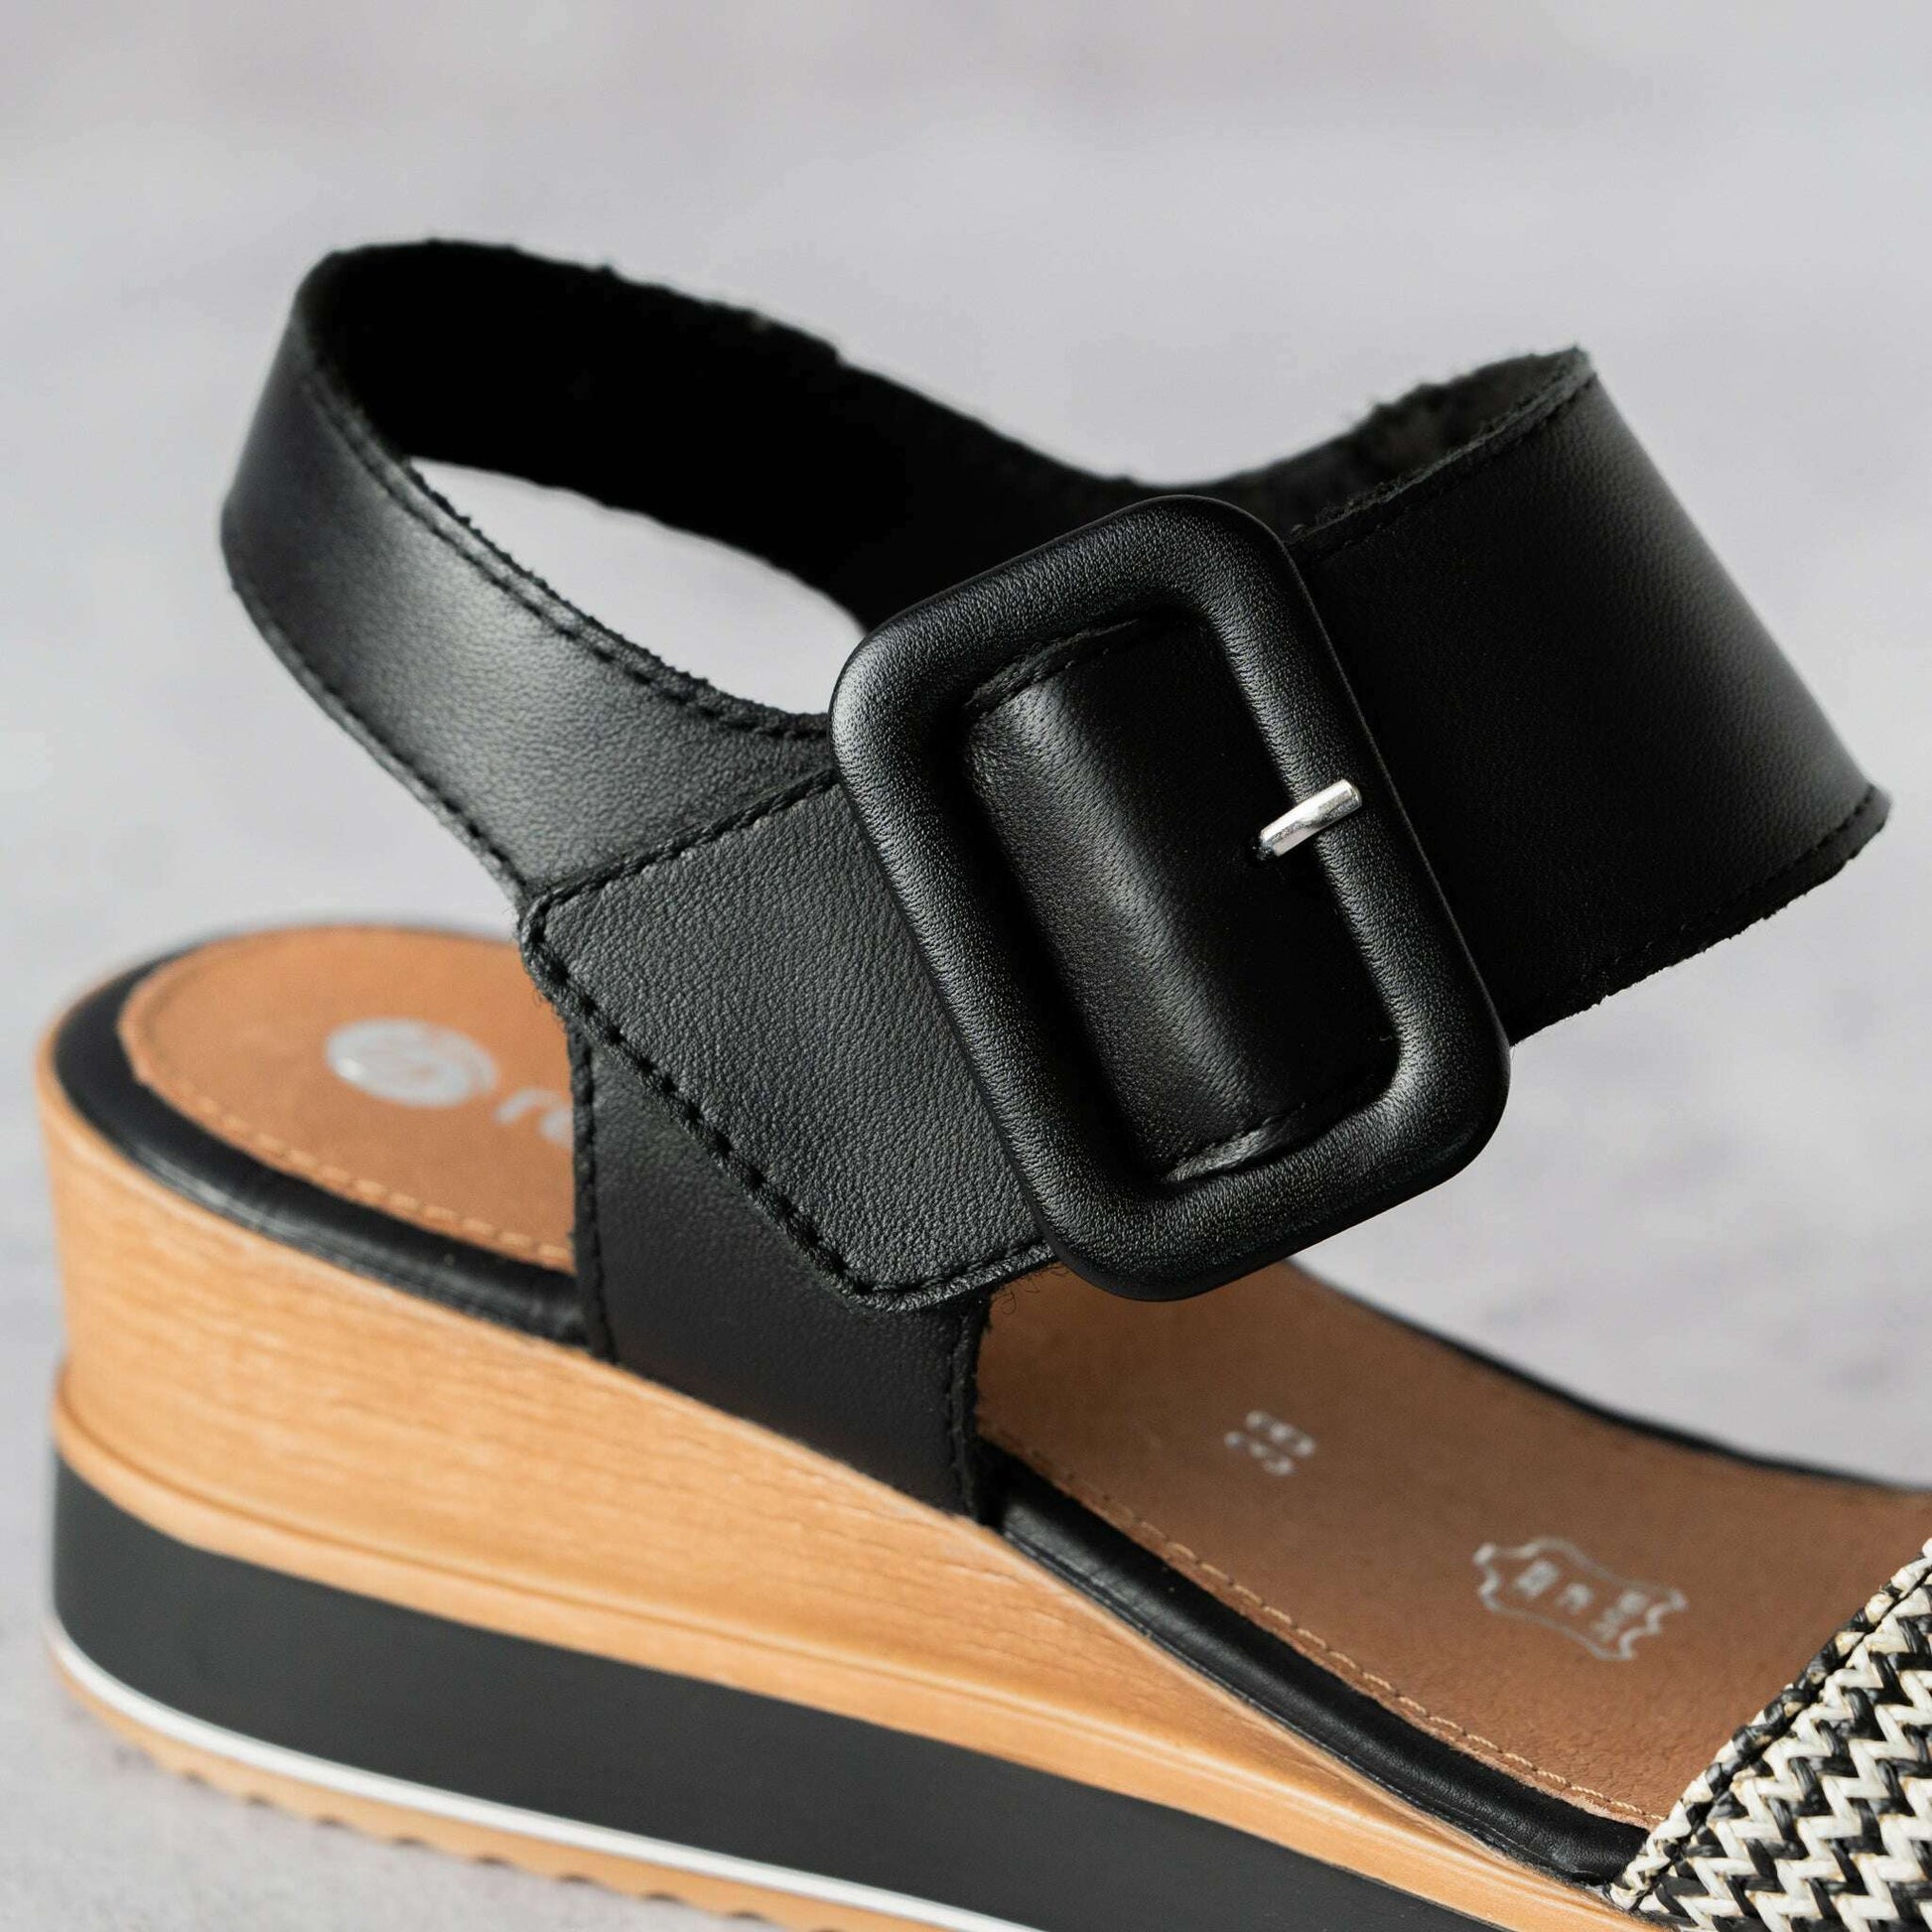 Remonte - D6453 in Black & Cream, Sandals, Remonte, Plum Bottom